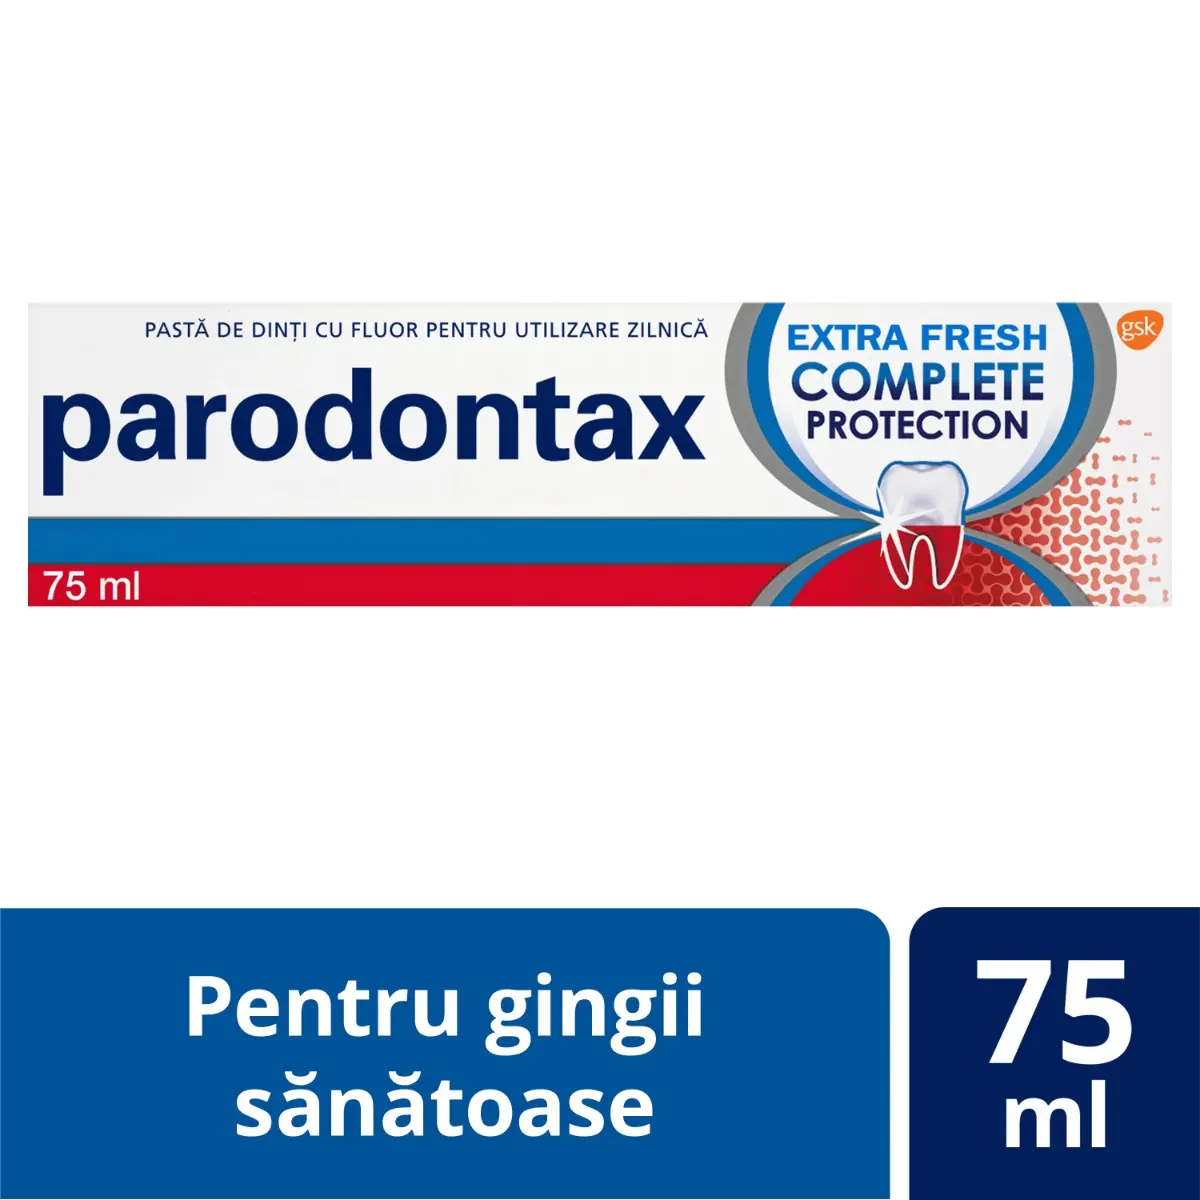 Pasta de dinti Parodontax Complete Protection Extra Fresh, 75ml